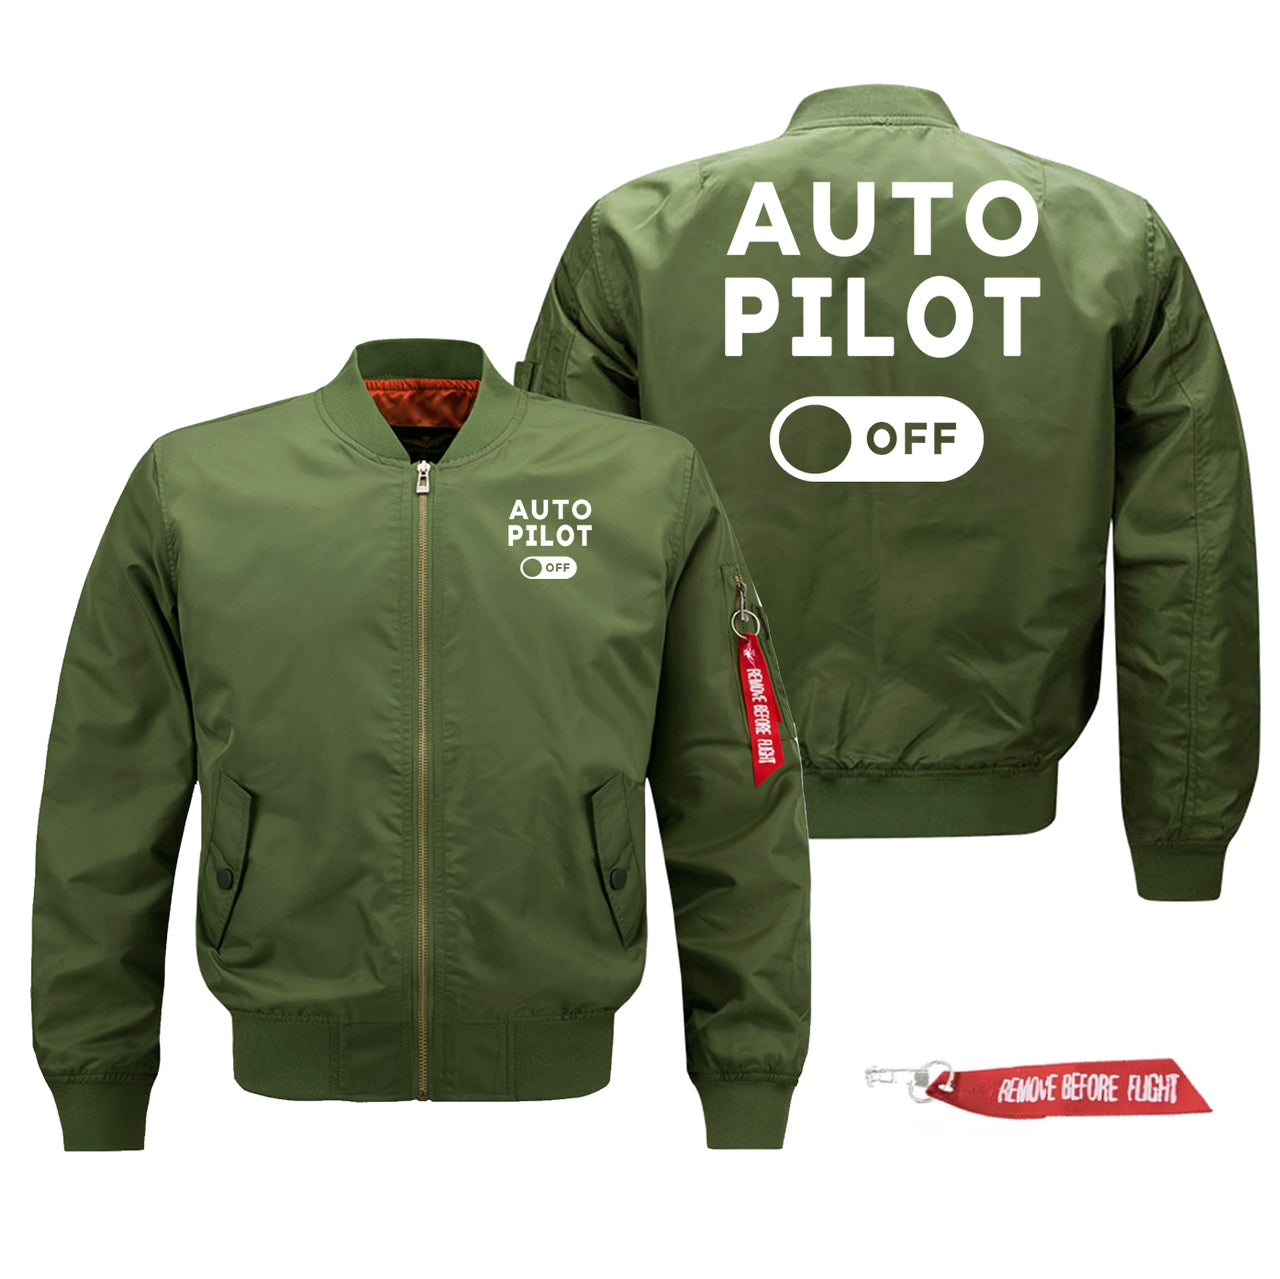 Auto Pilot Off Designed Pilot Jackets (Customizable)